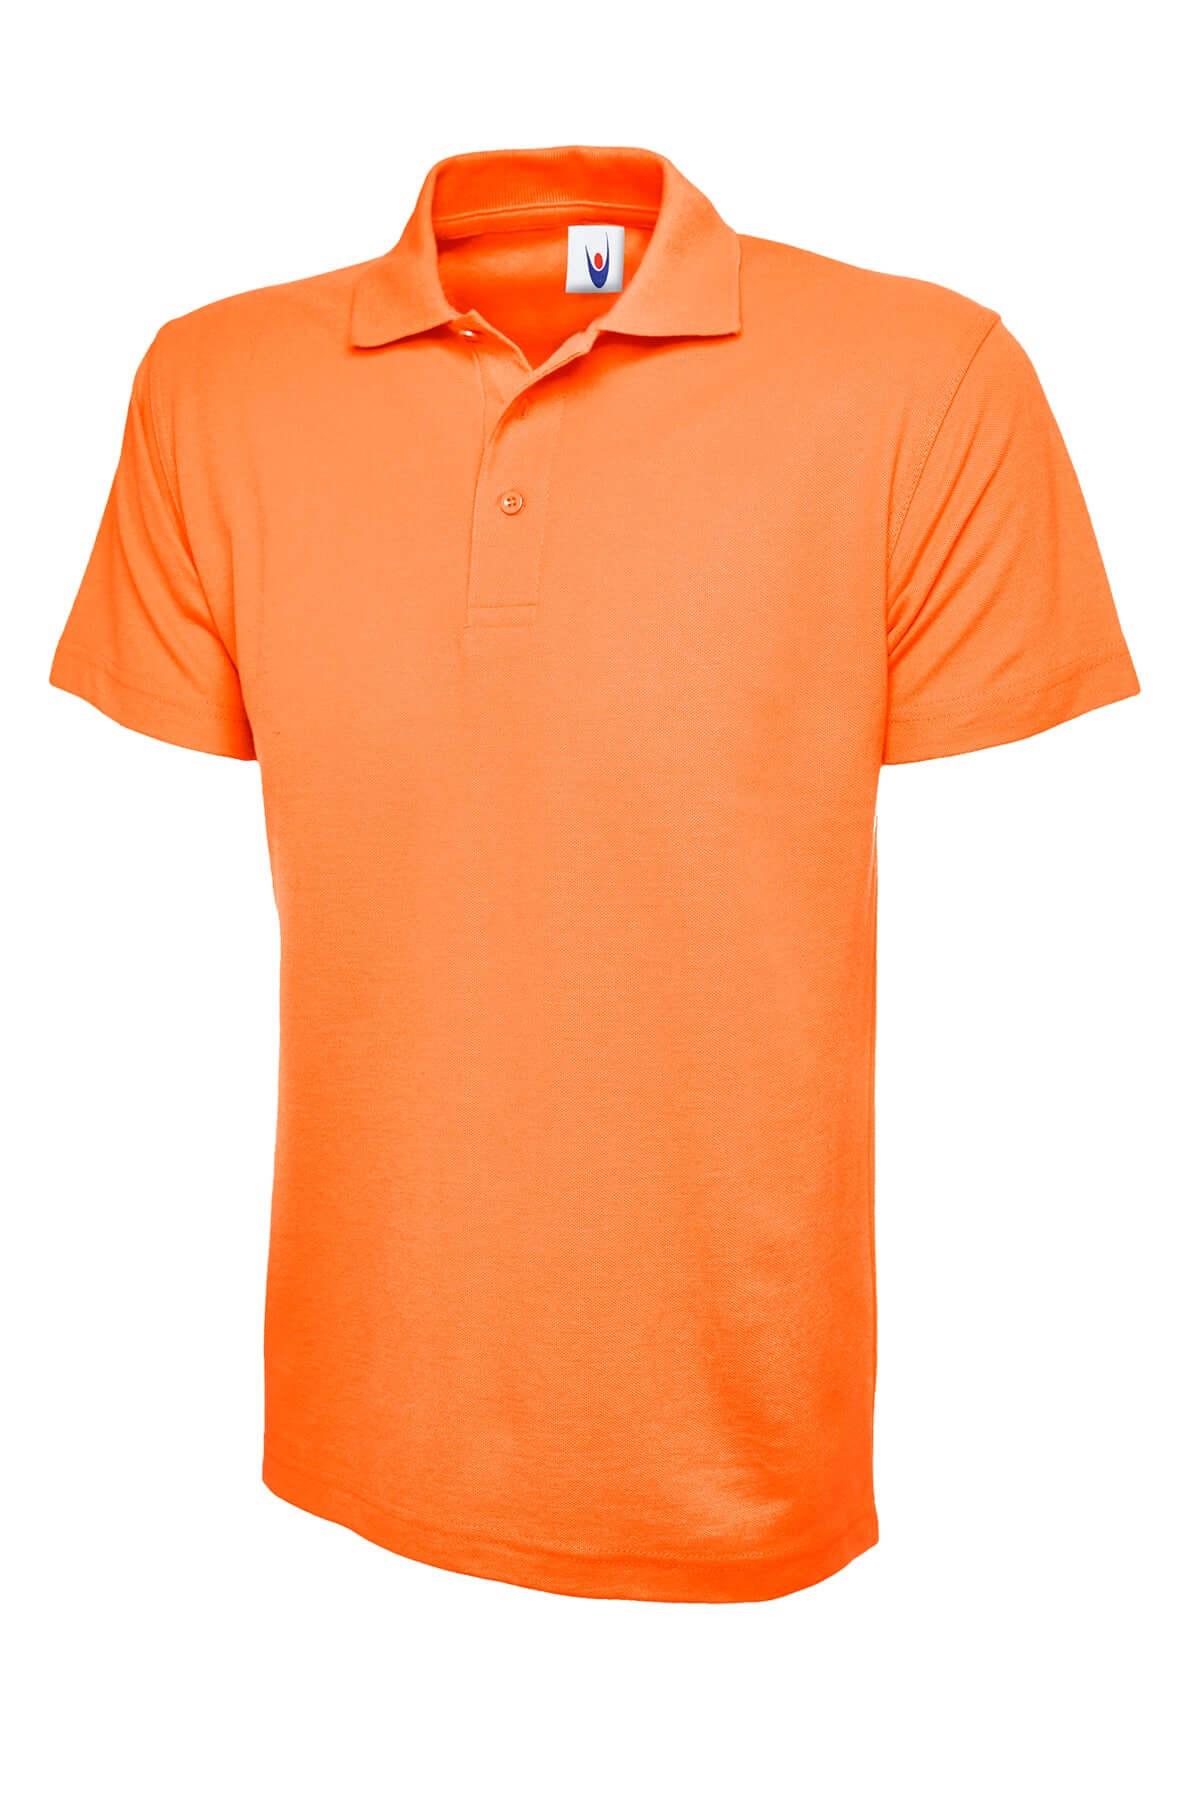 Pegasus Uniform Classic Unisex Polo Shirt - Orange